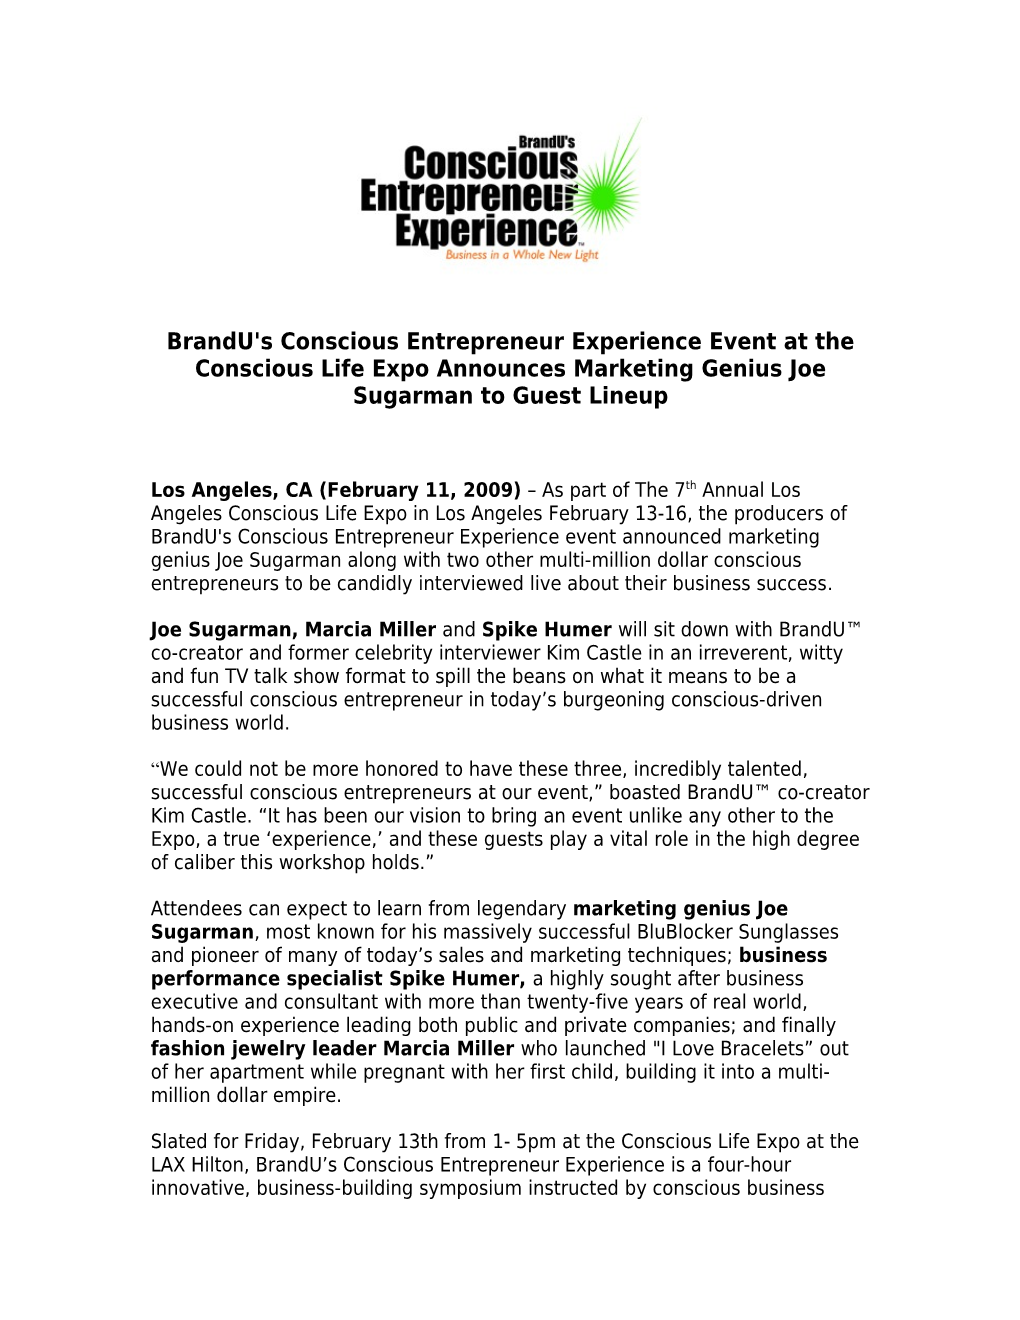 Brandu's Conscious Entrepreneur Experience Event at the Conscious Life Expo Announces